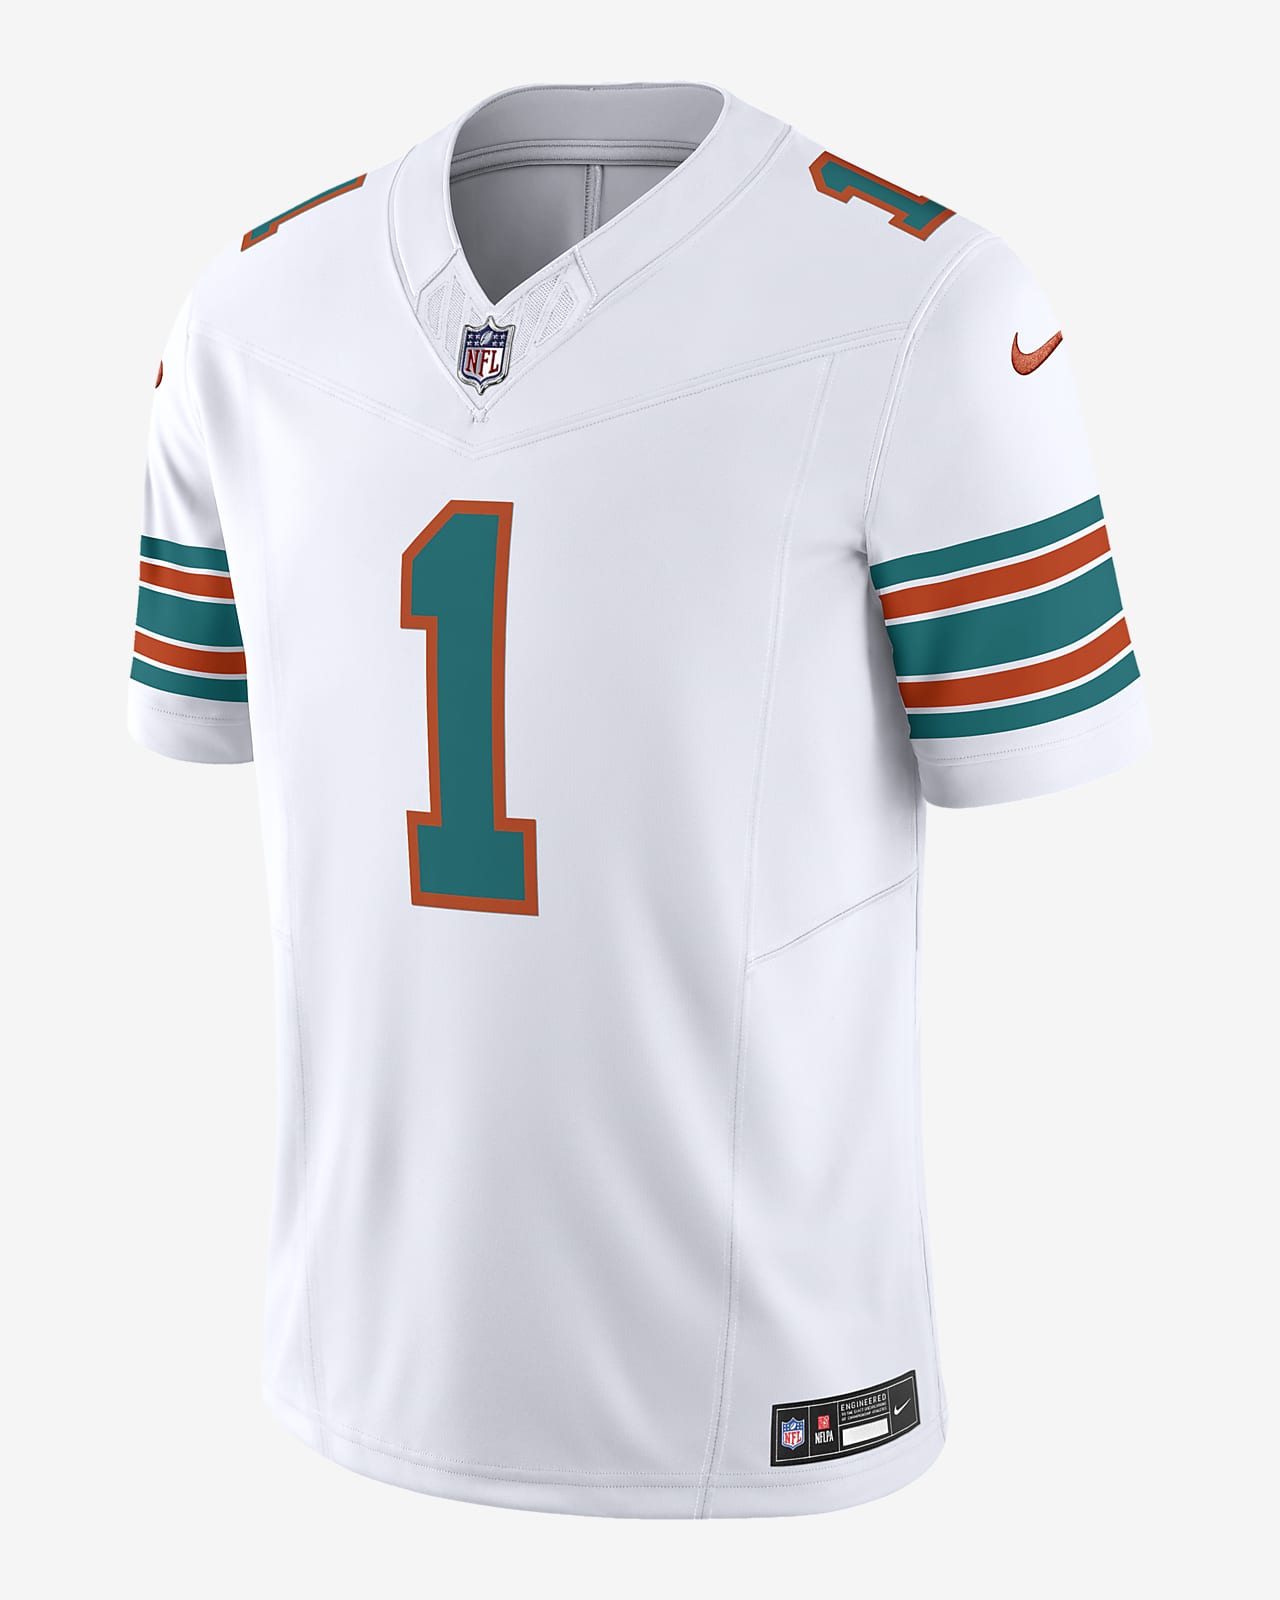 Jersey de fútbol americano Nike Dri-FIT de la NFL Limited para hombre Tua Tagovailoa Miami Dolphins